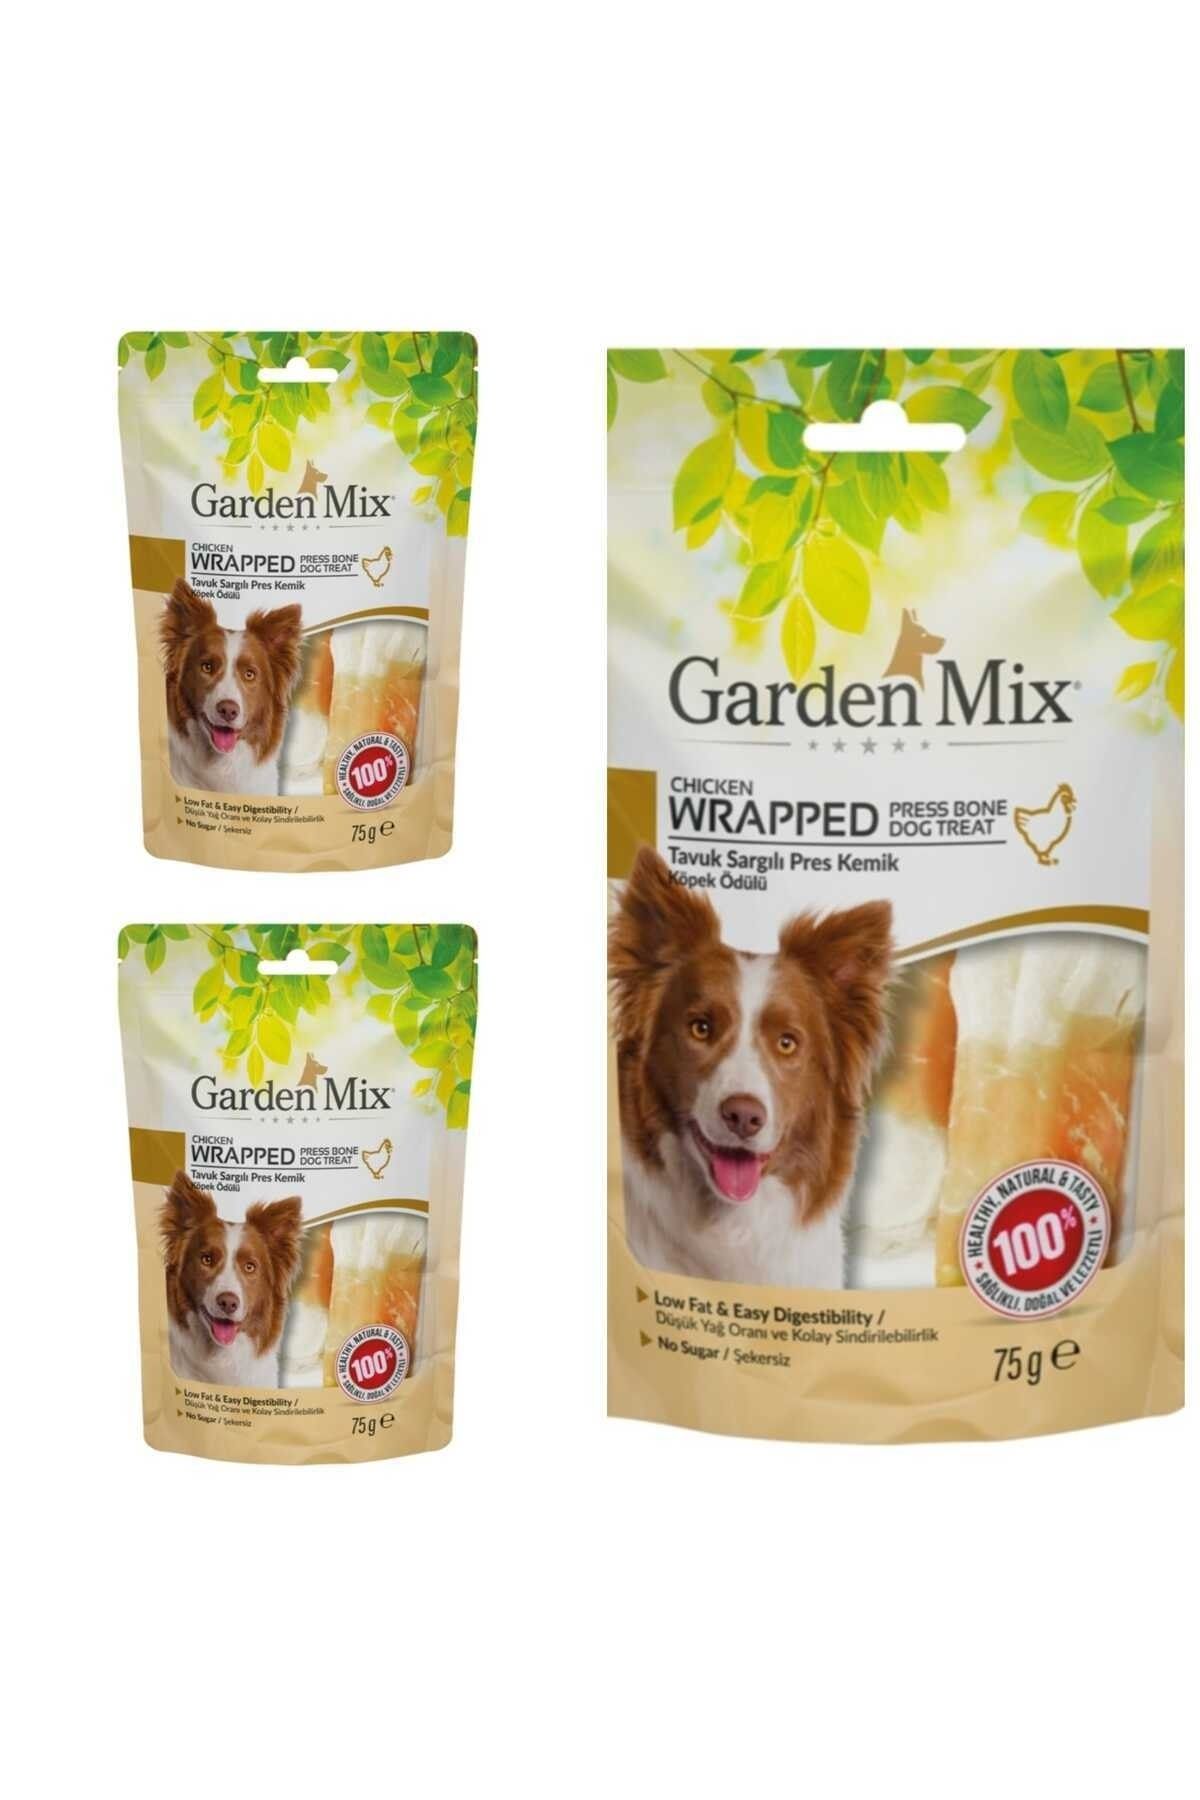 Gardenmix Neo Pet Market Garden Mix Tavuk Sargılı Pres Kemik Köpek Ödülü 75 Gr X 3 Adet